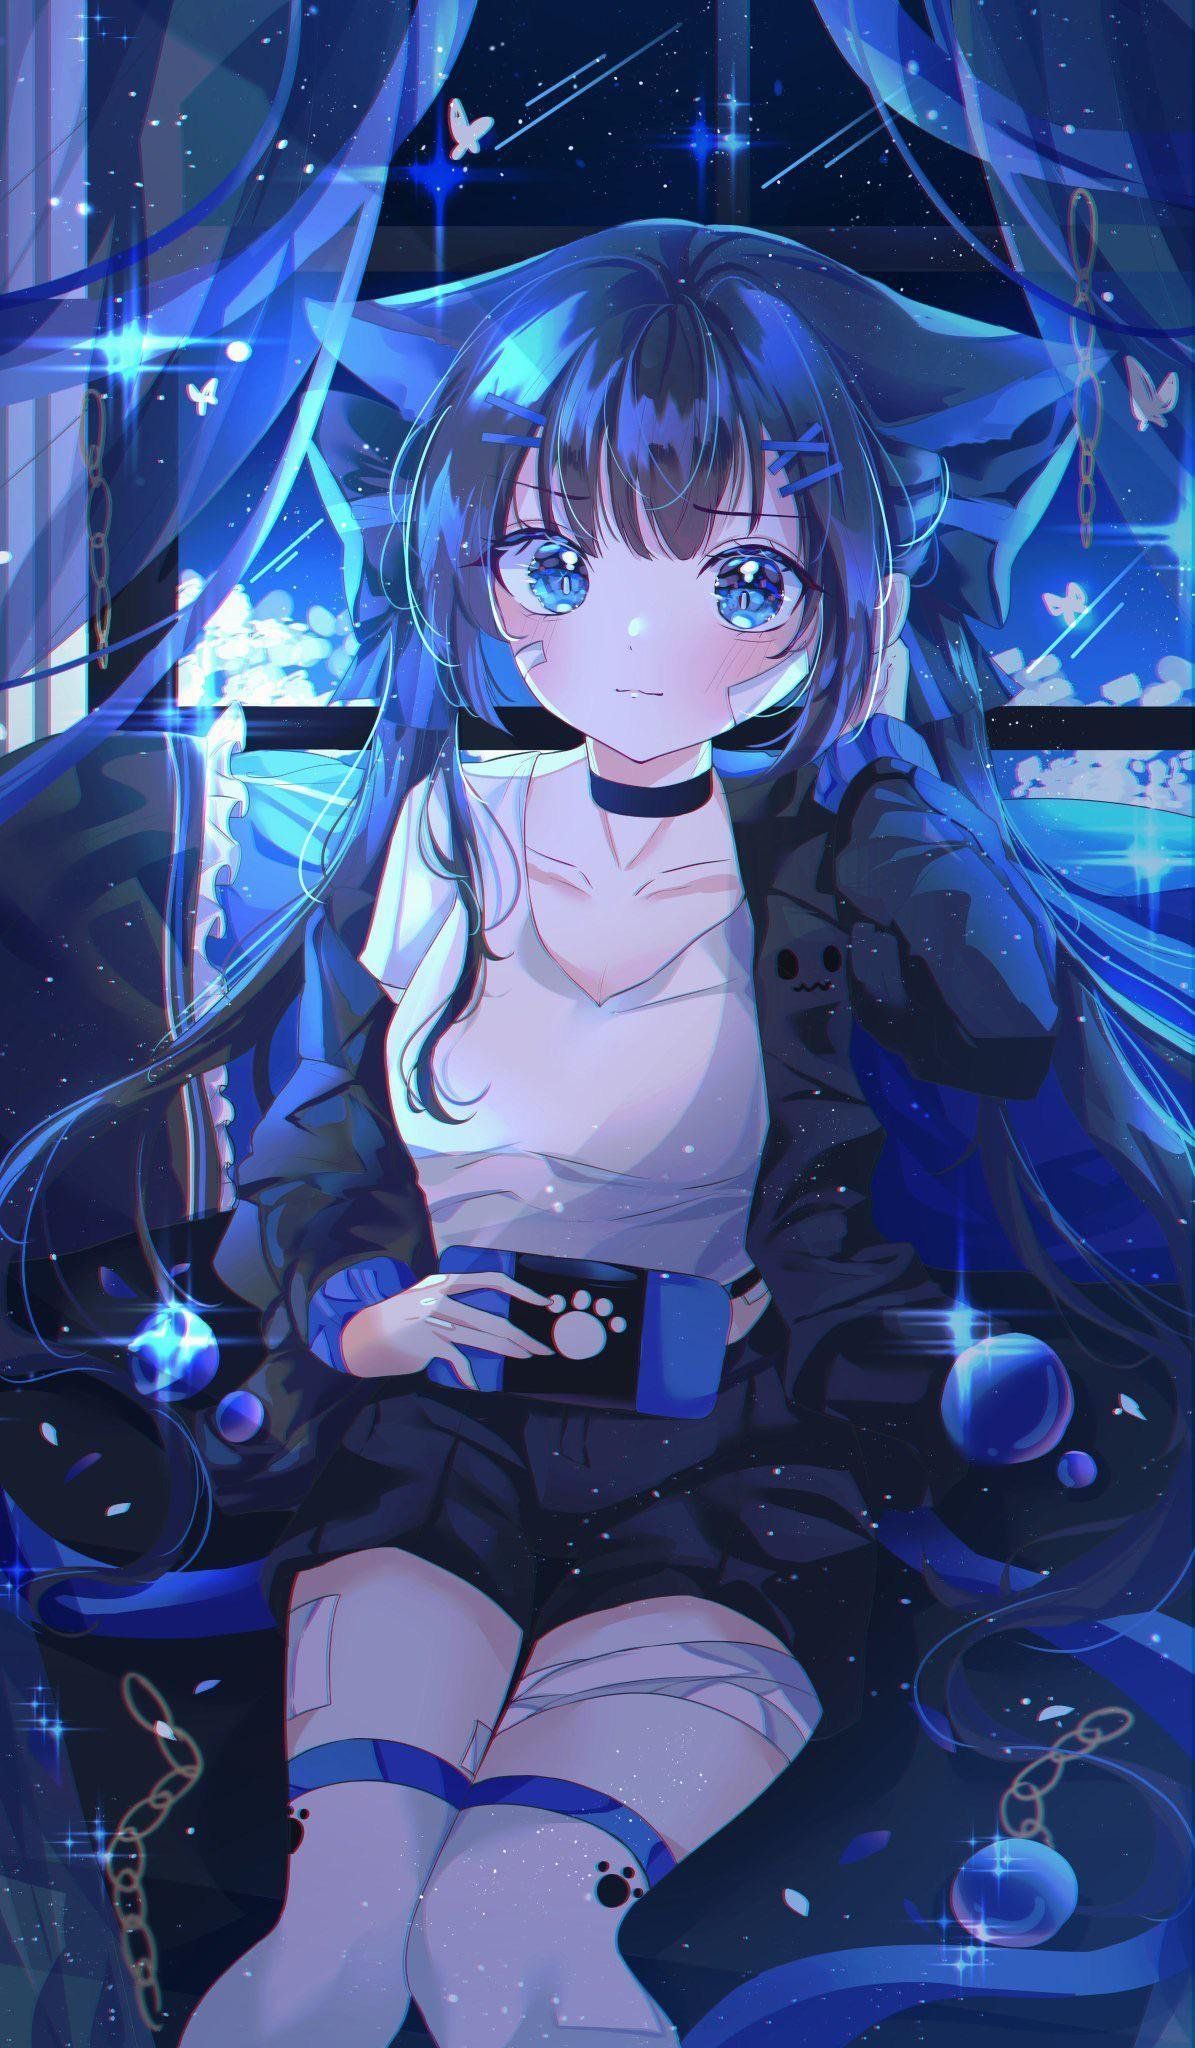 Gaming anime girl aesthetic Wallpaper Download